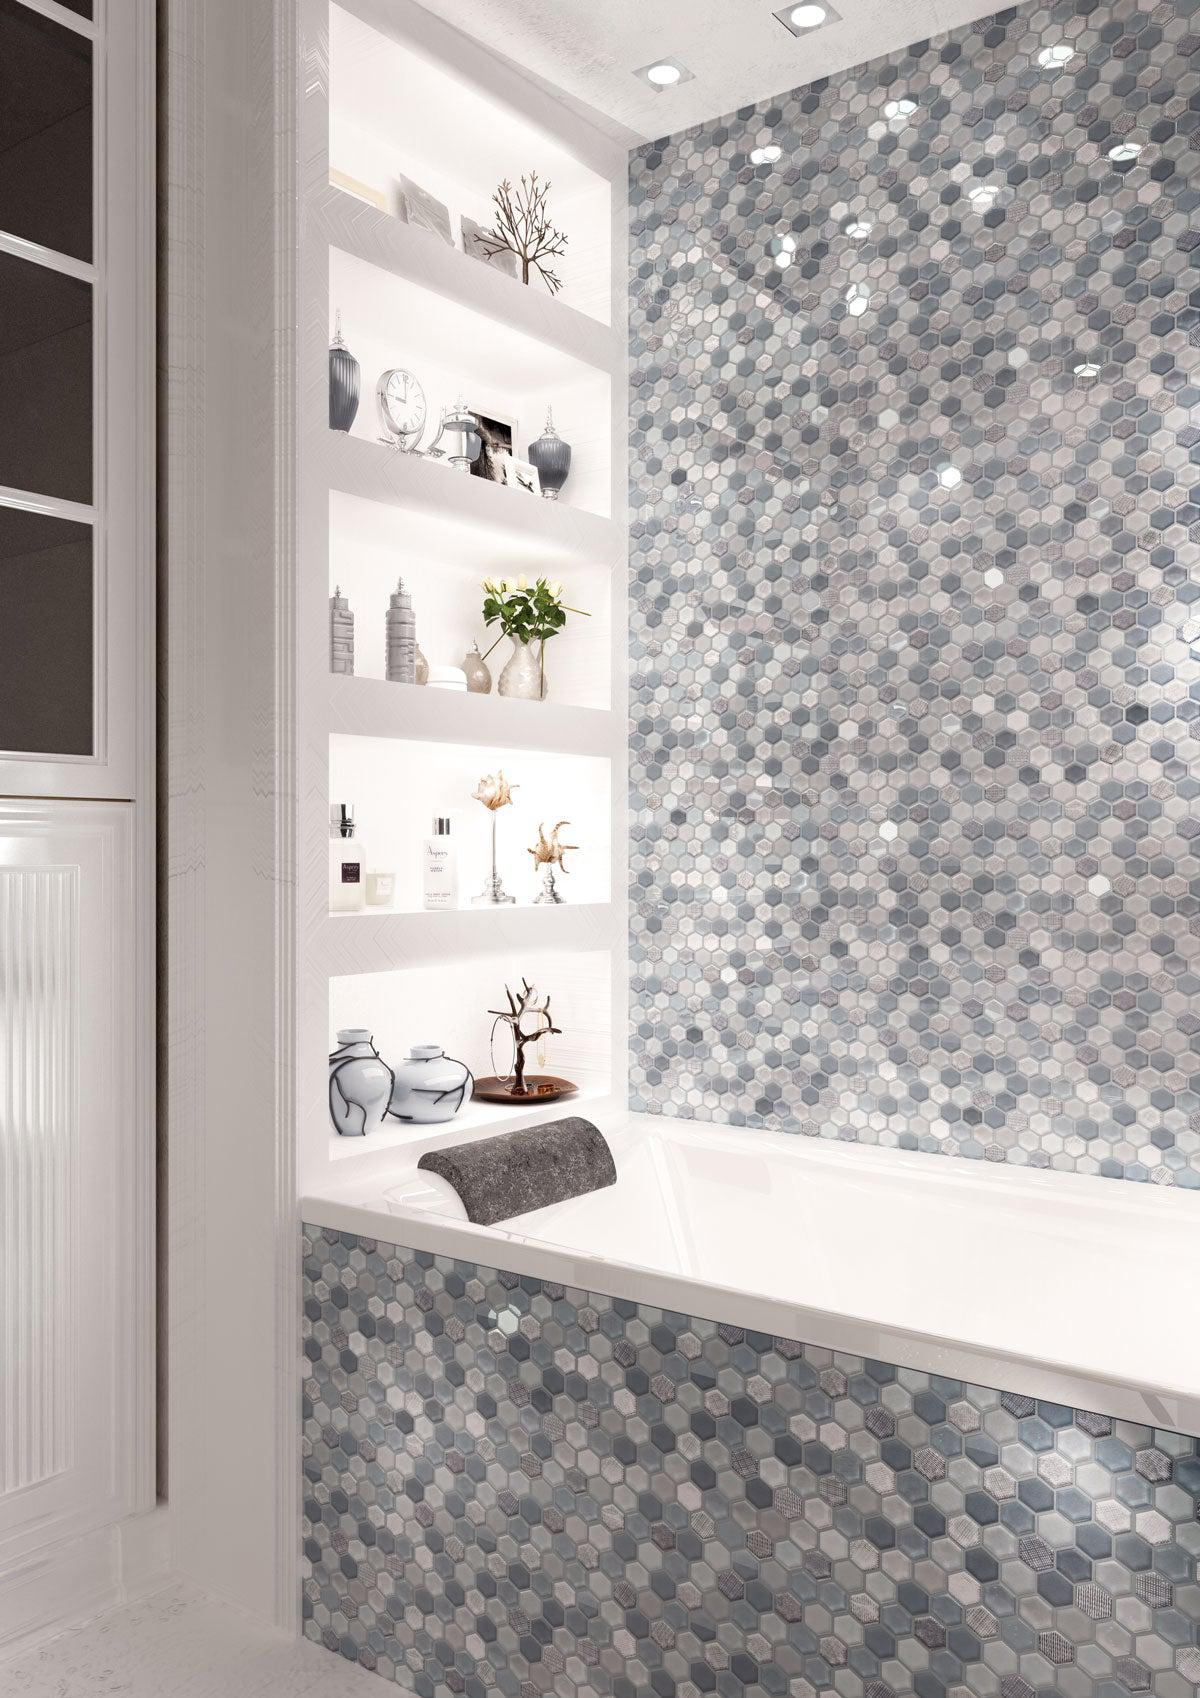 Moongrey Hexagon Glass Mosaic Tile Bathtub Surorund and Bathroom Wall